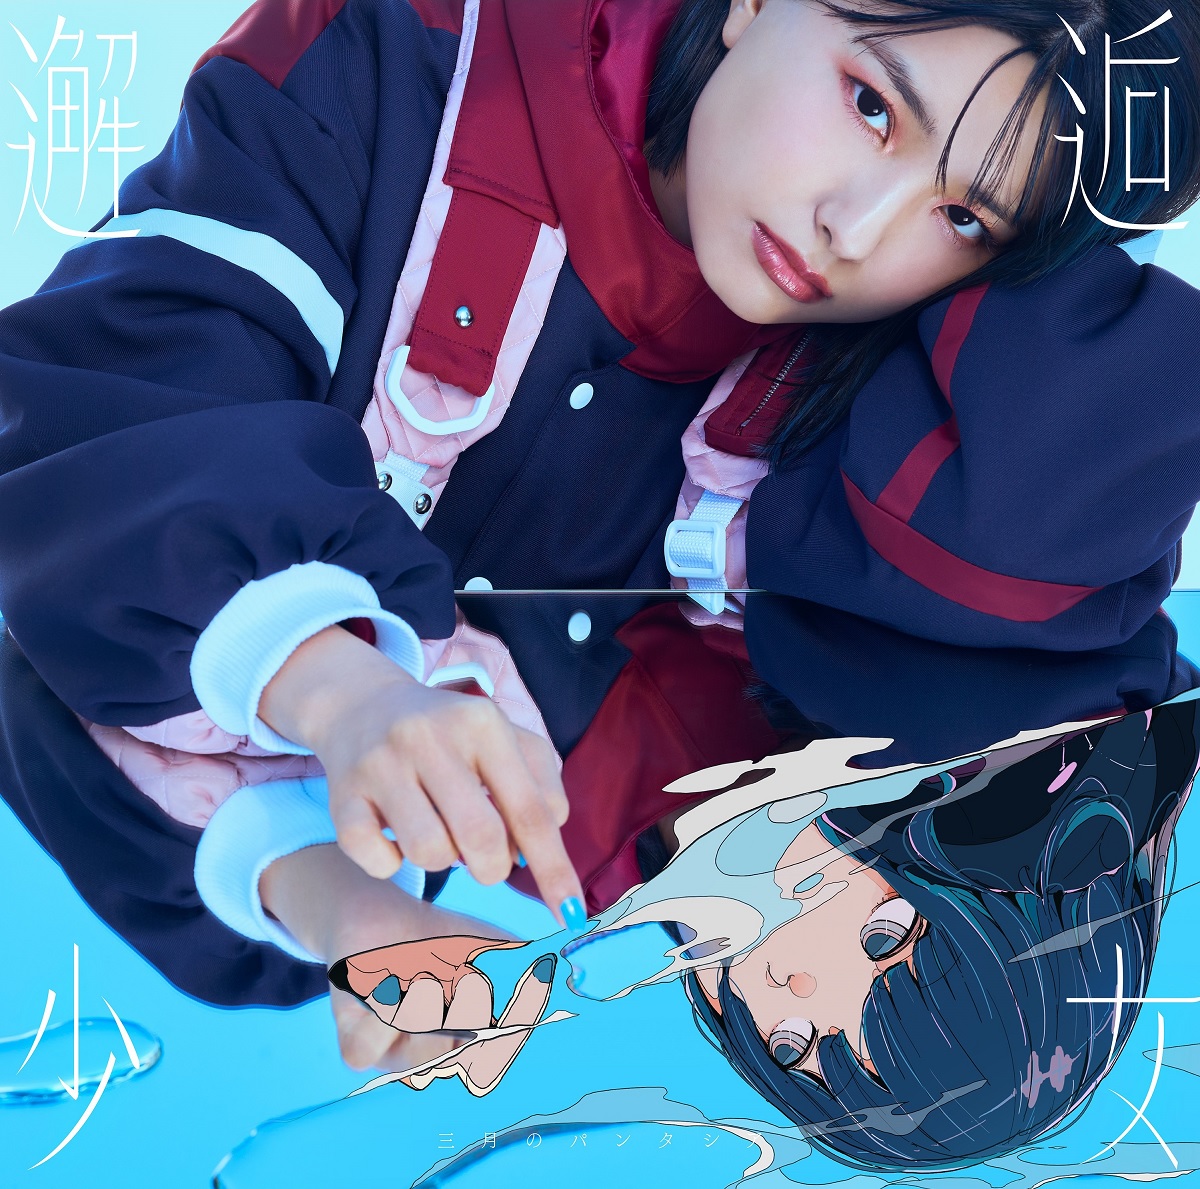 Cover art for『Sangatsu no Phantasia - Shiawase no Arika』from the release『Kaikou Shoujo』